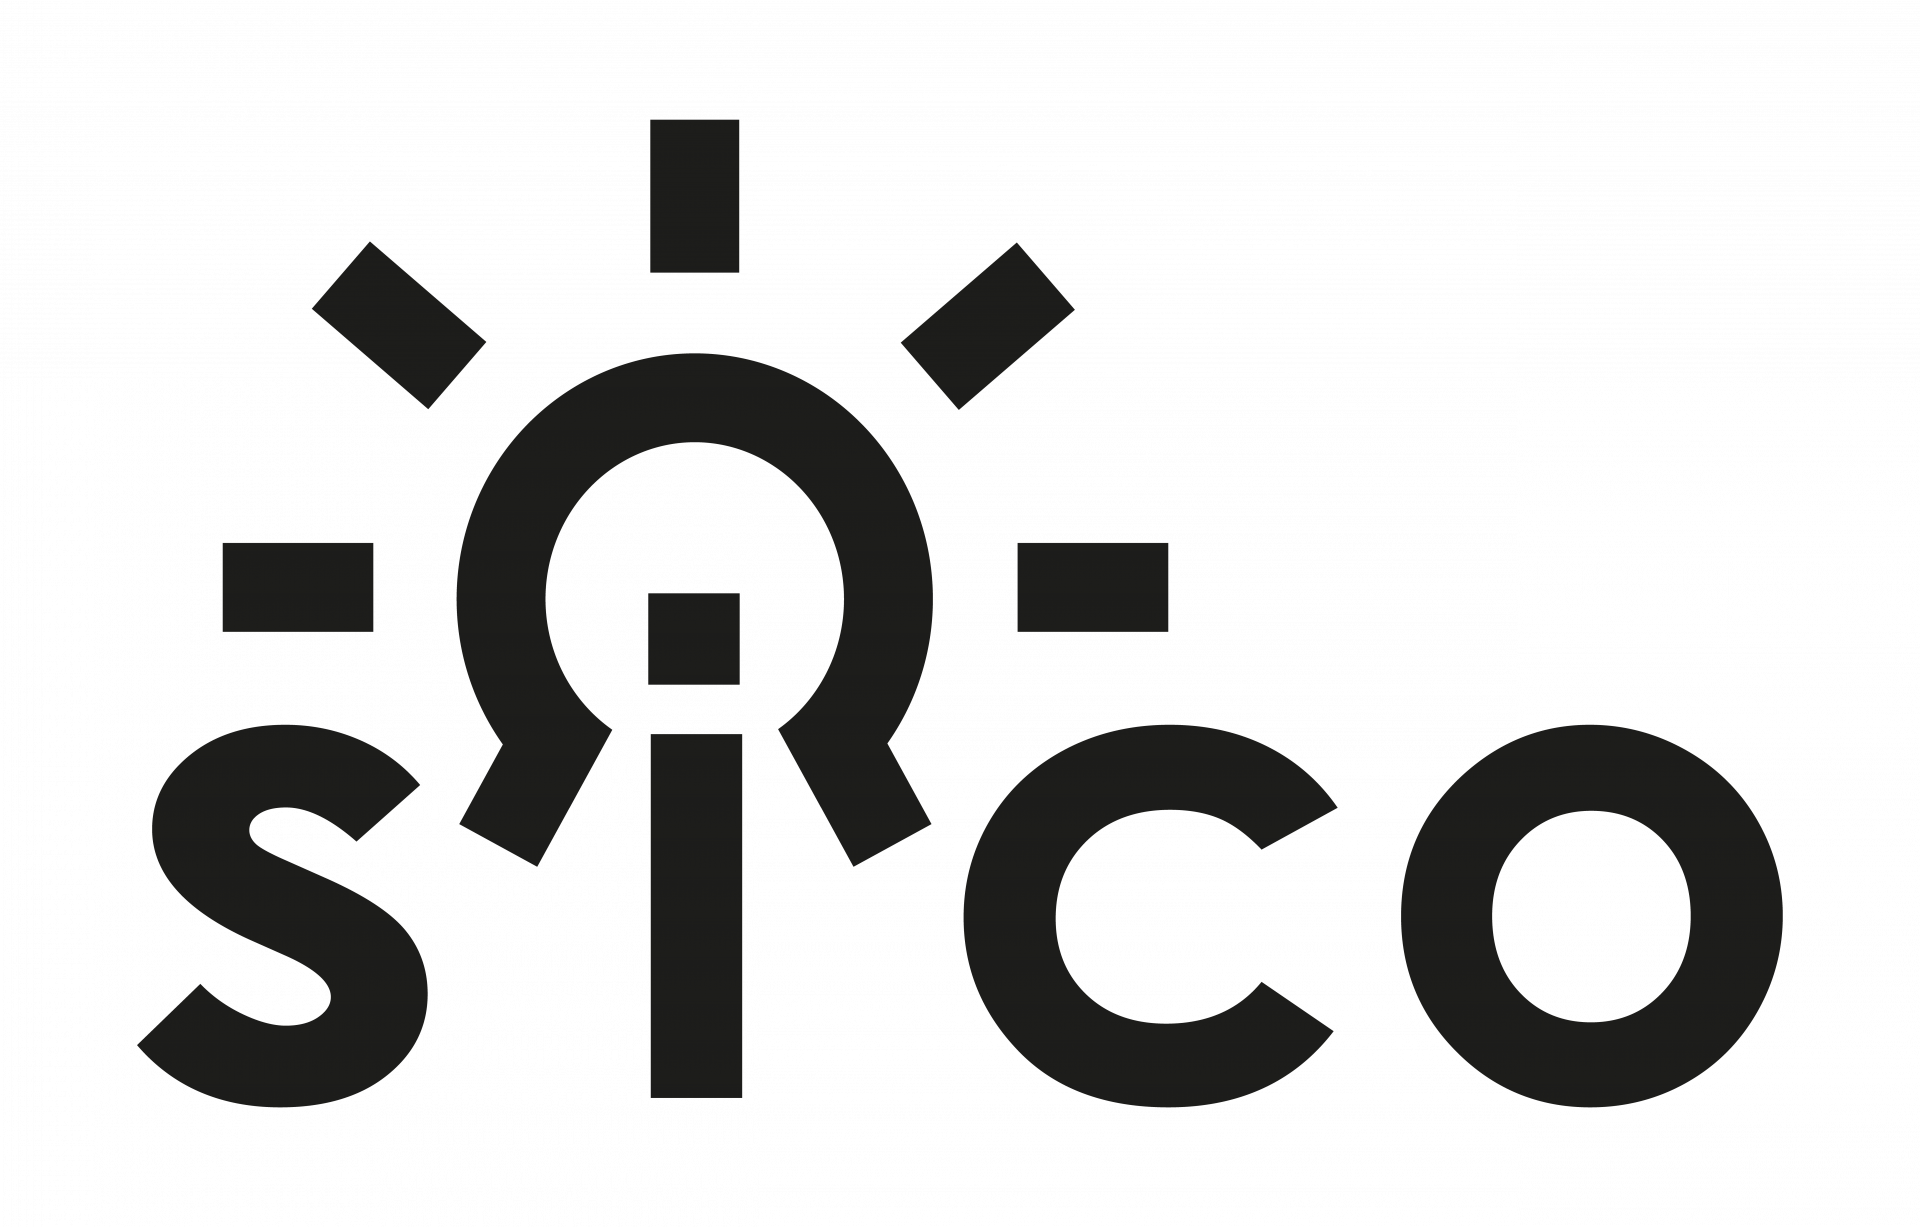 Sico Logo